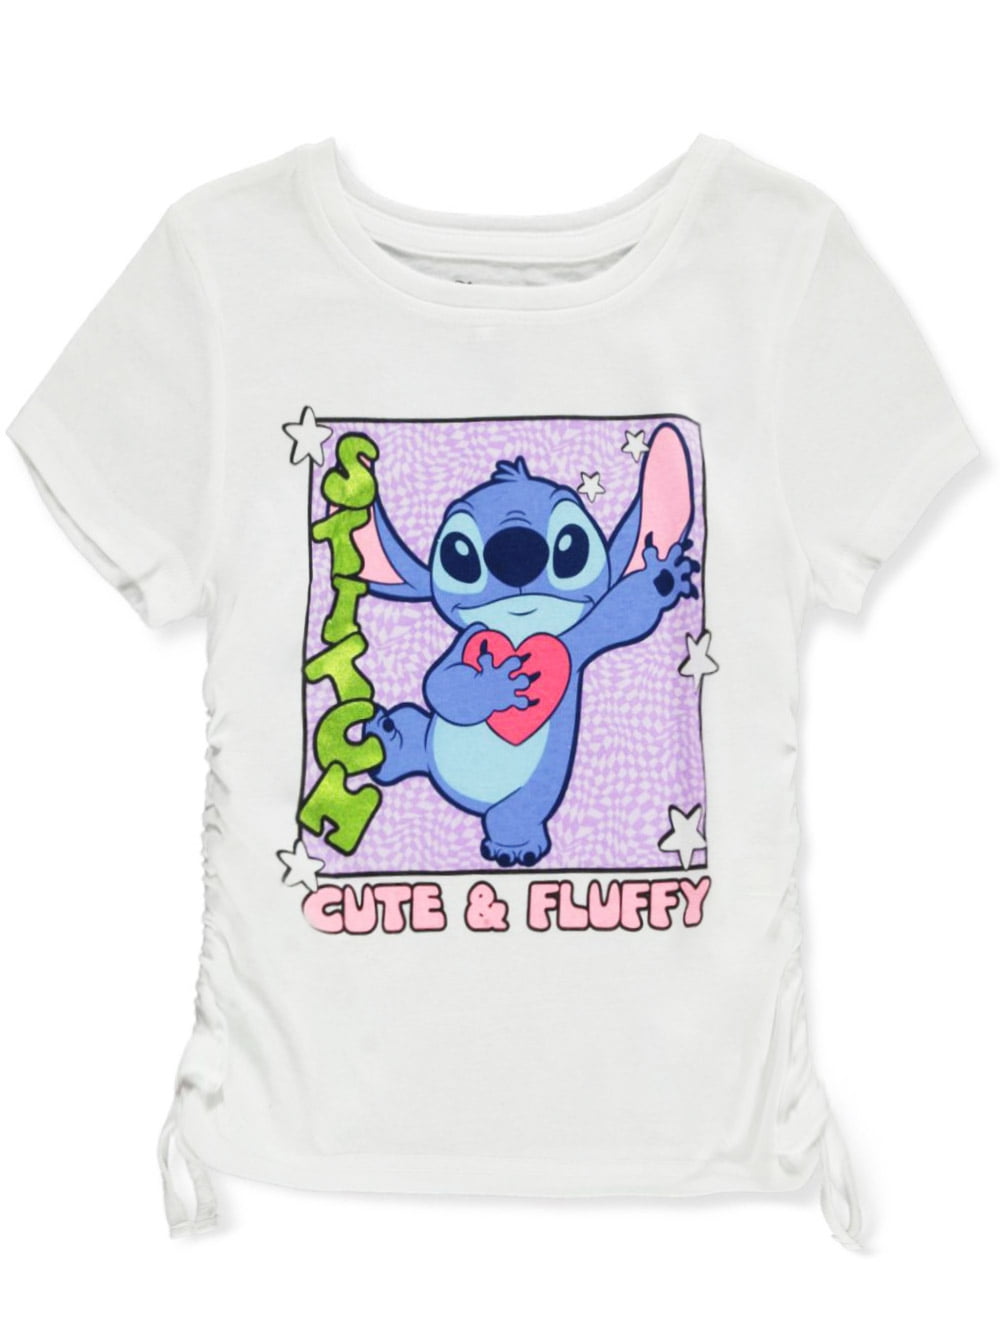 Disney Lilo & Stitch Girls' Cute T-Shirt - white, 14 - 16 (Big Girls)